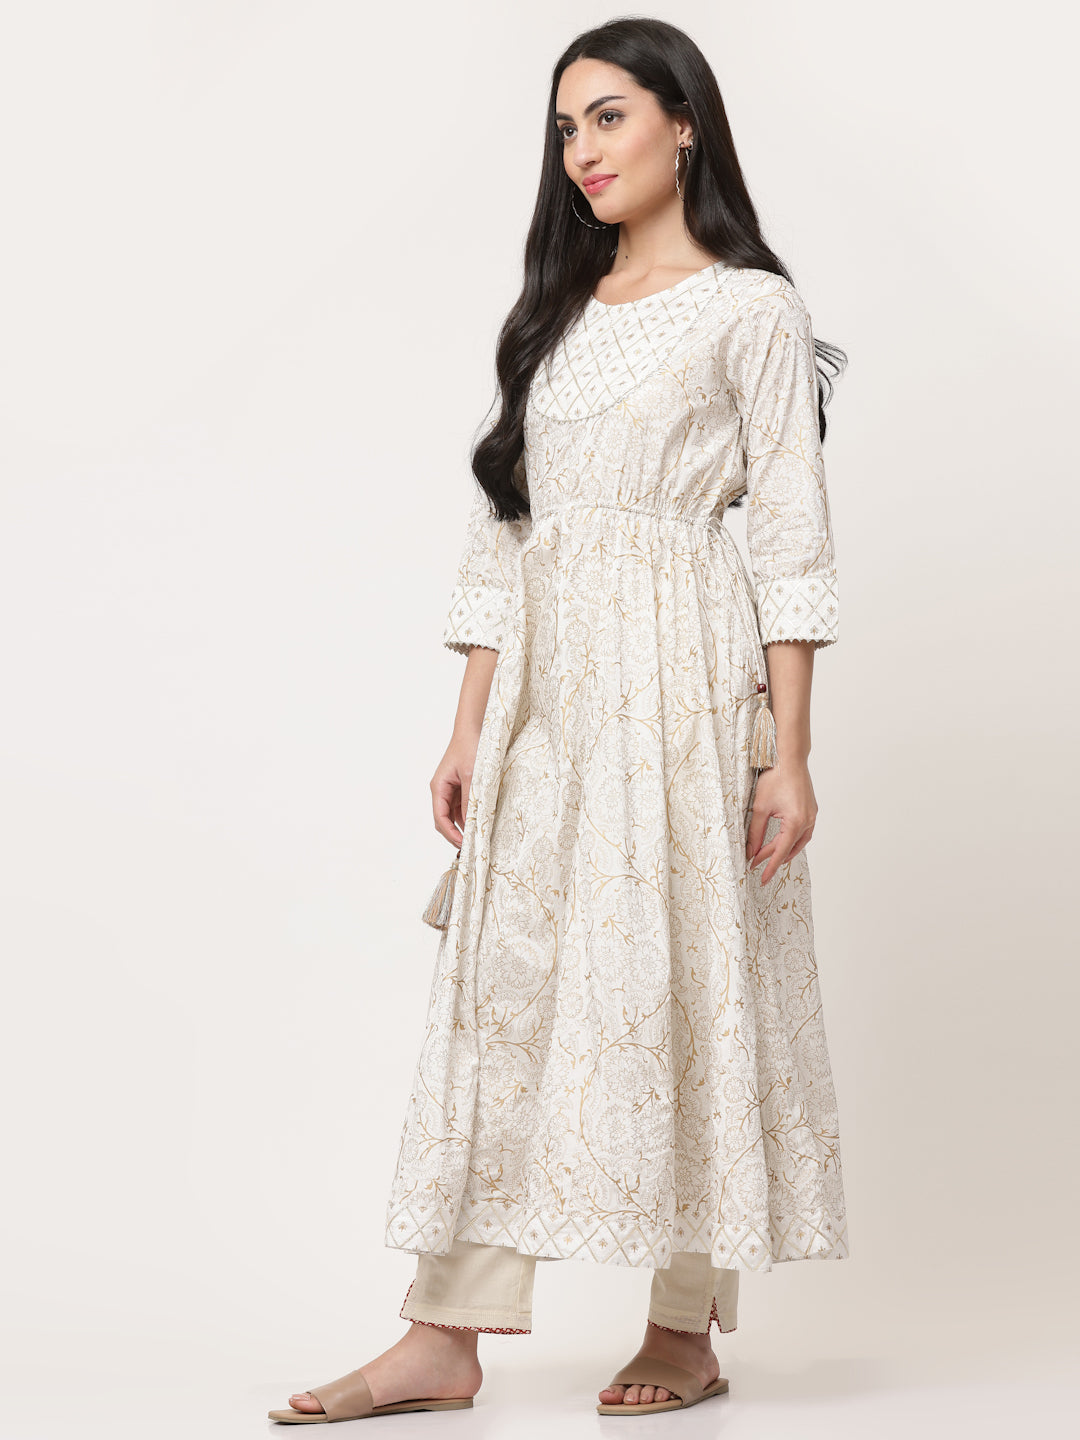 Off White Printed Designer Anarkali Kurta Dress